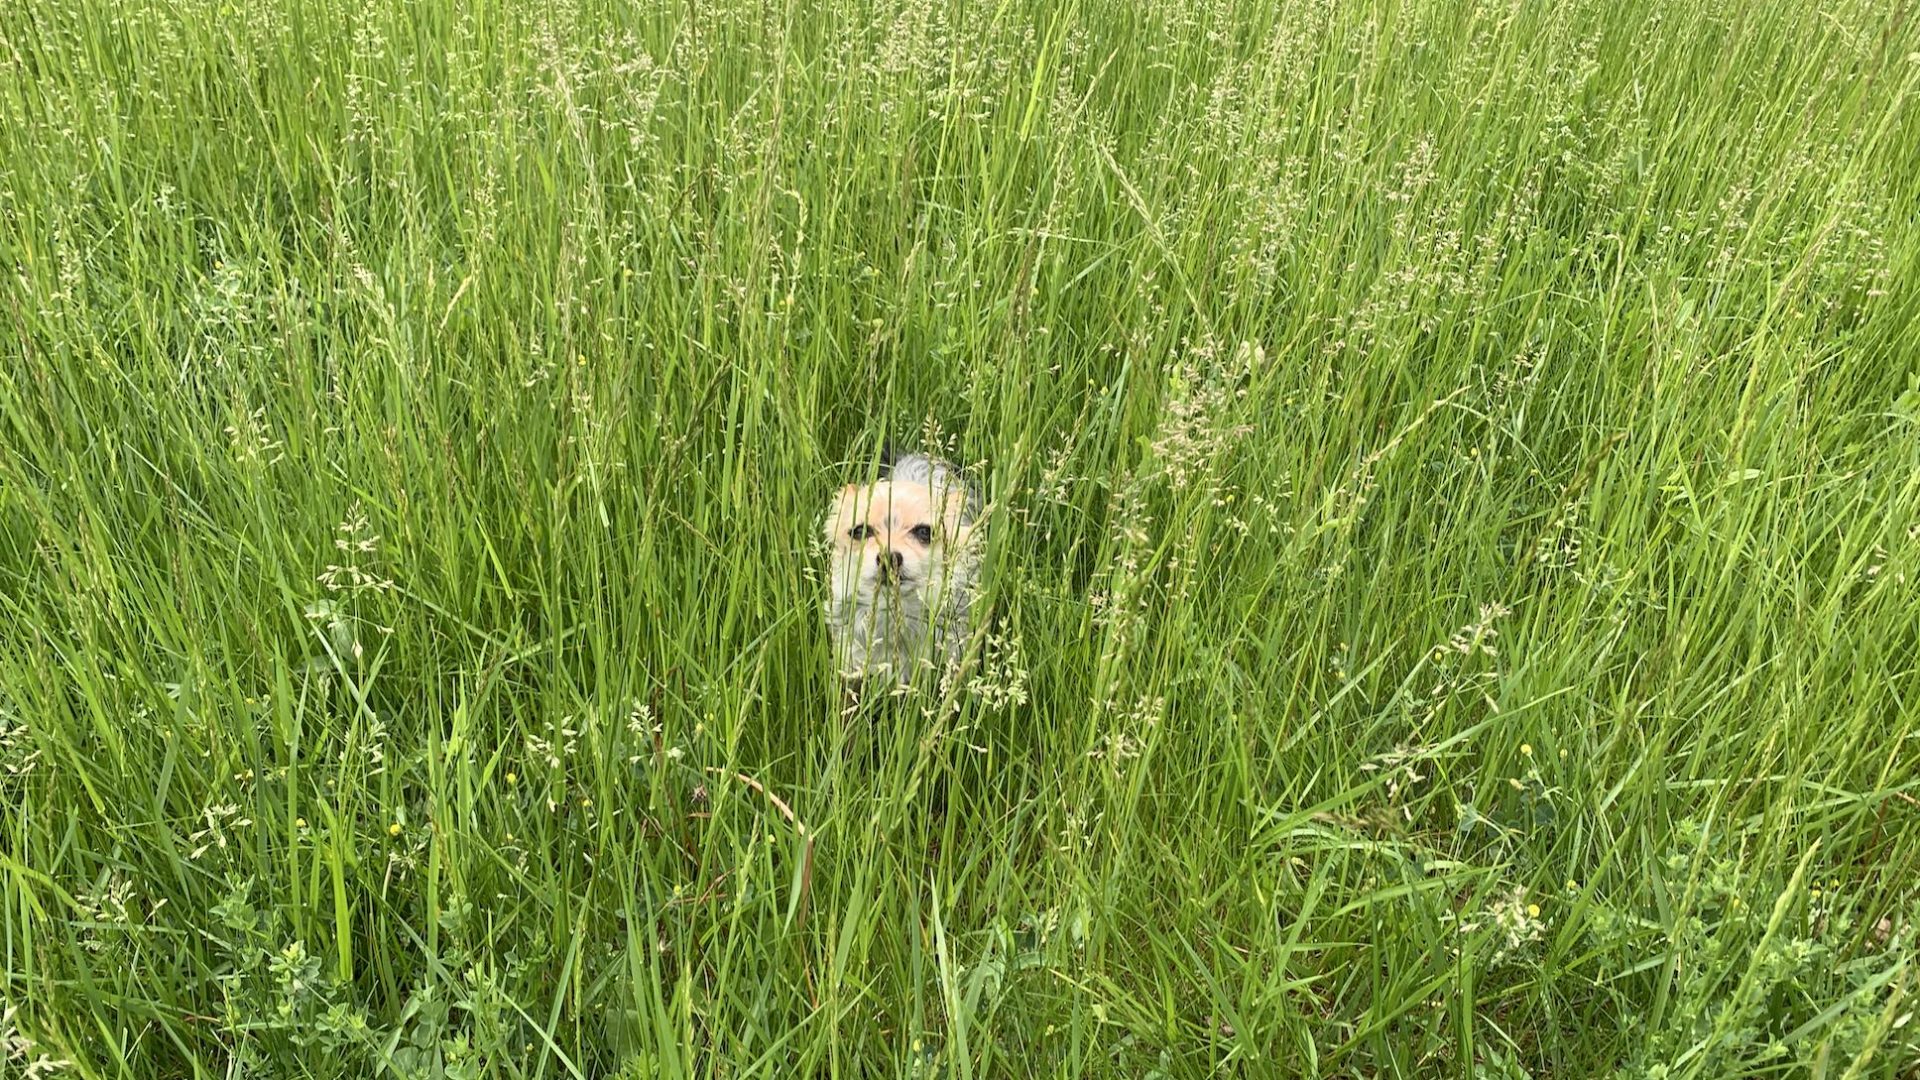 A yorkshire terrier hiding behind tall grass